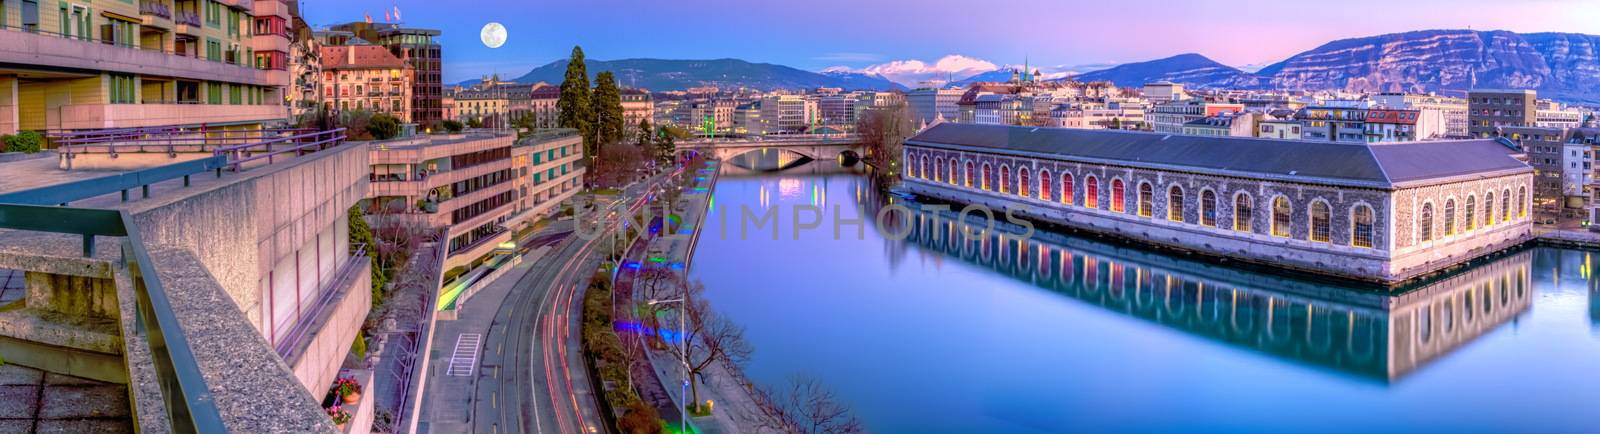 BFM, building and Rhone river, Geneva, Switzerland by Elenaphotos21